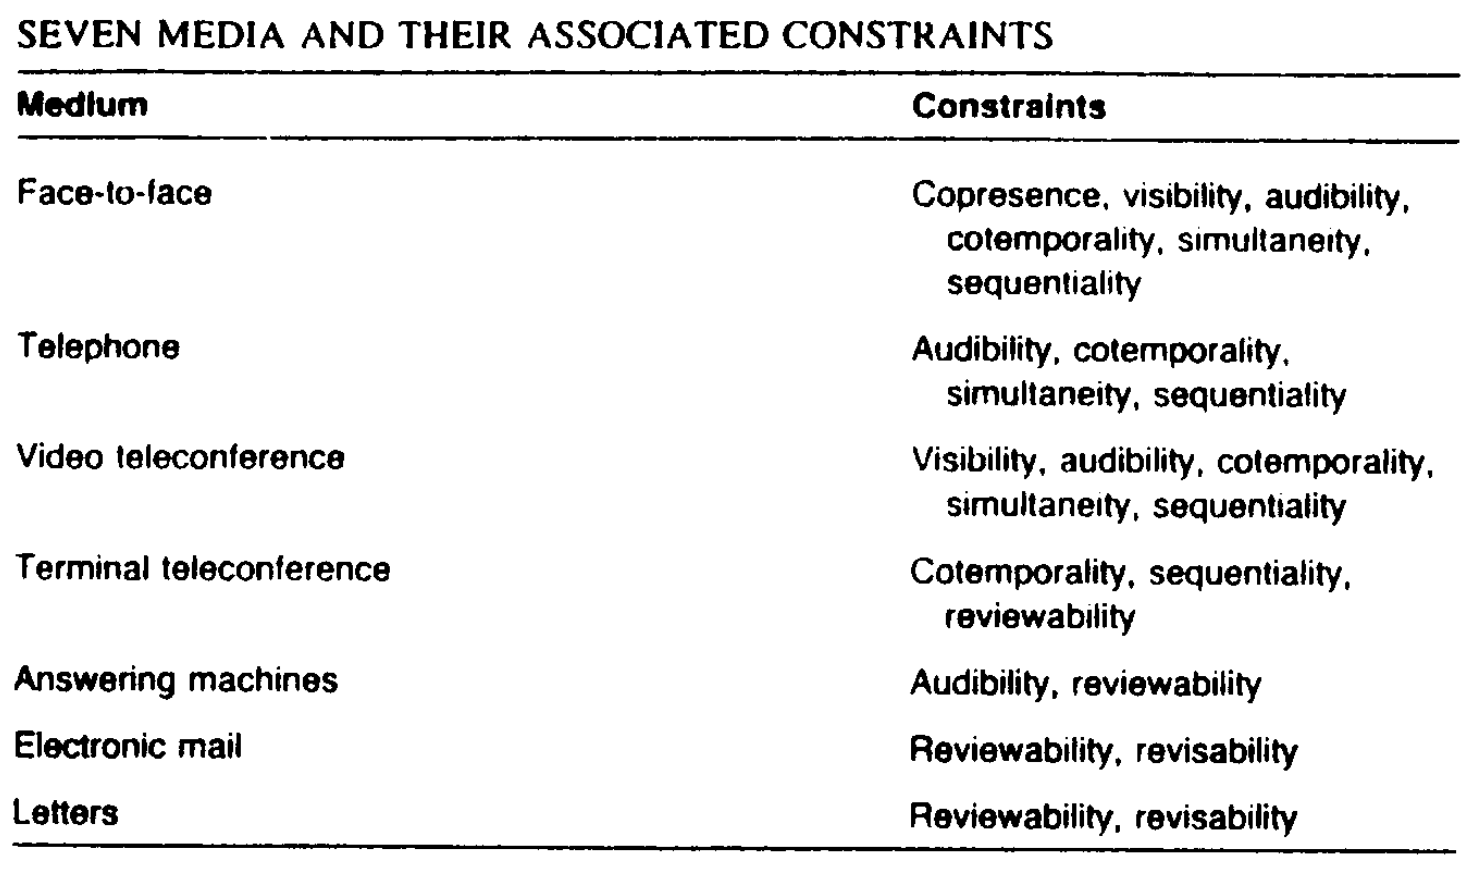 Table of media constraints from Clark & Brennan.